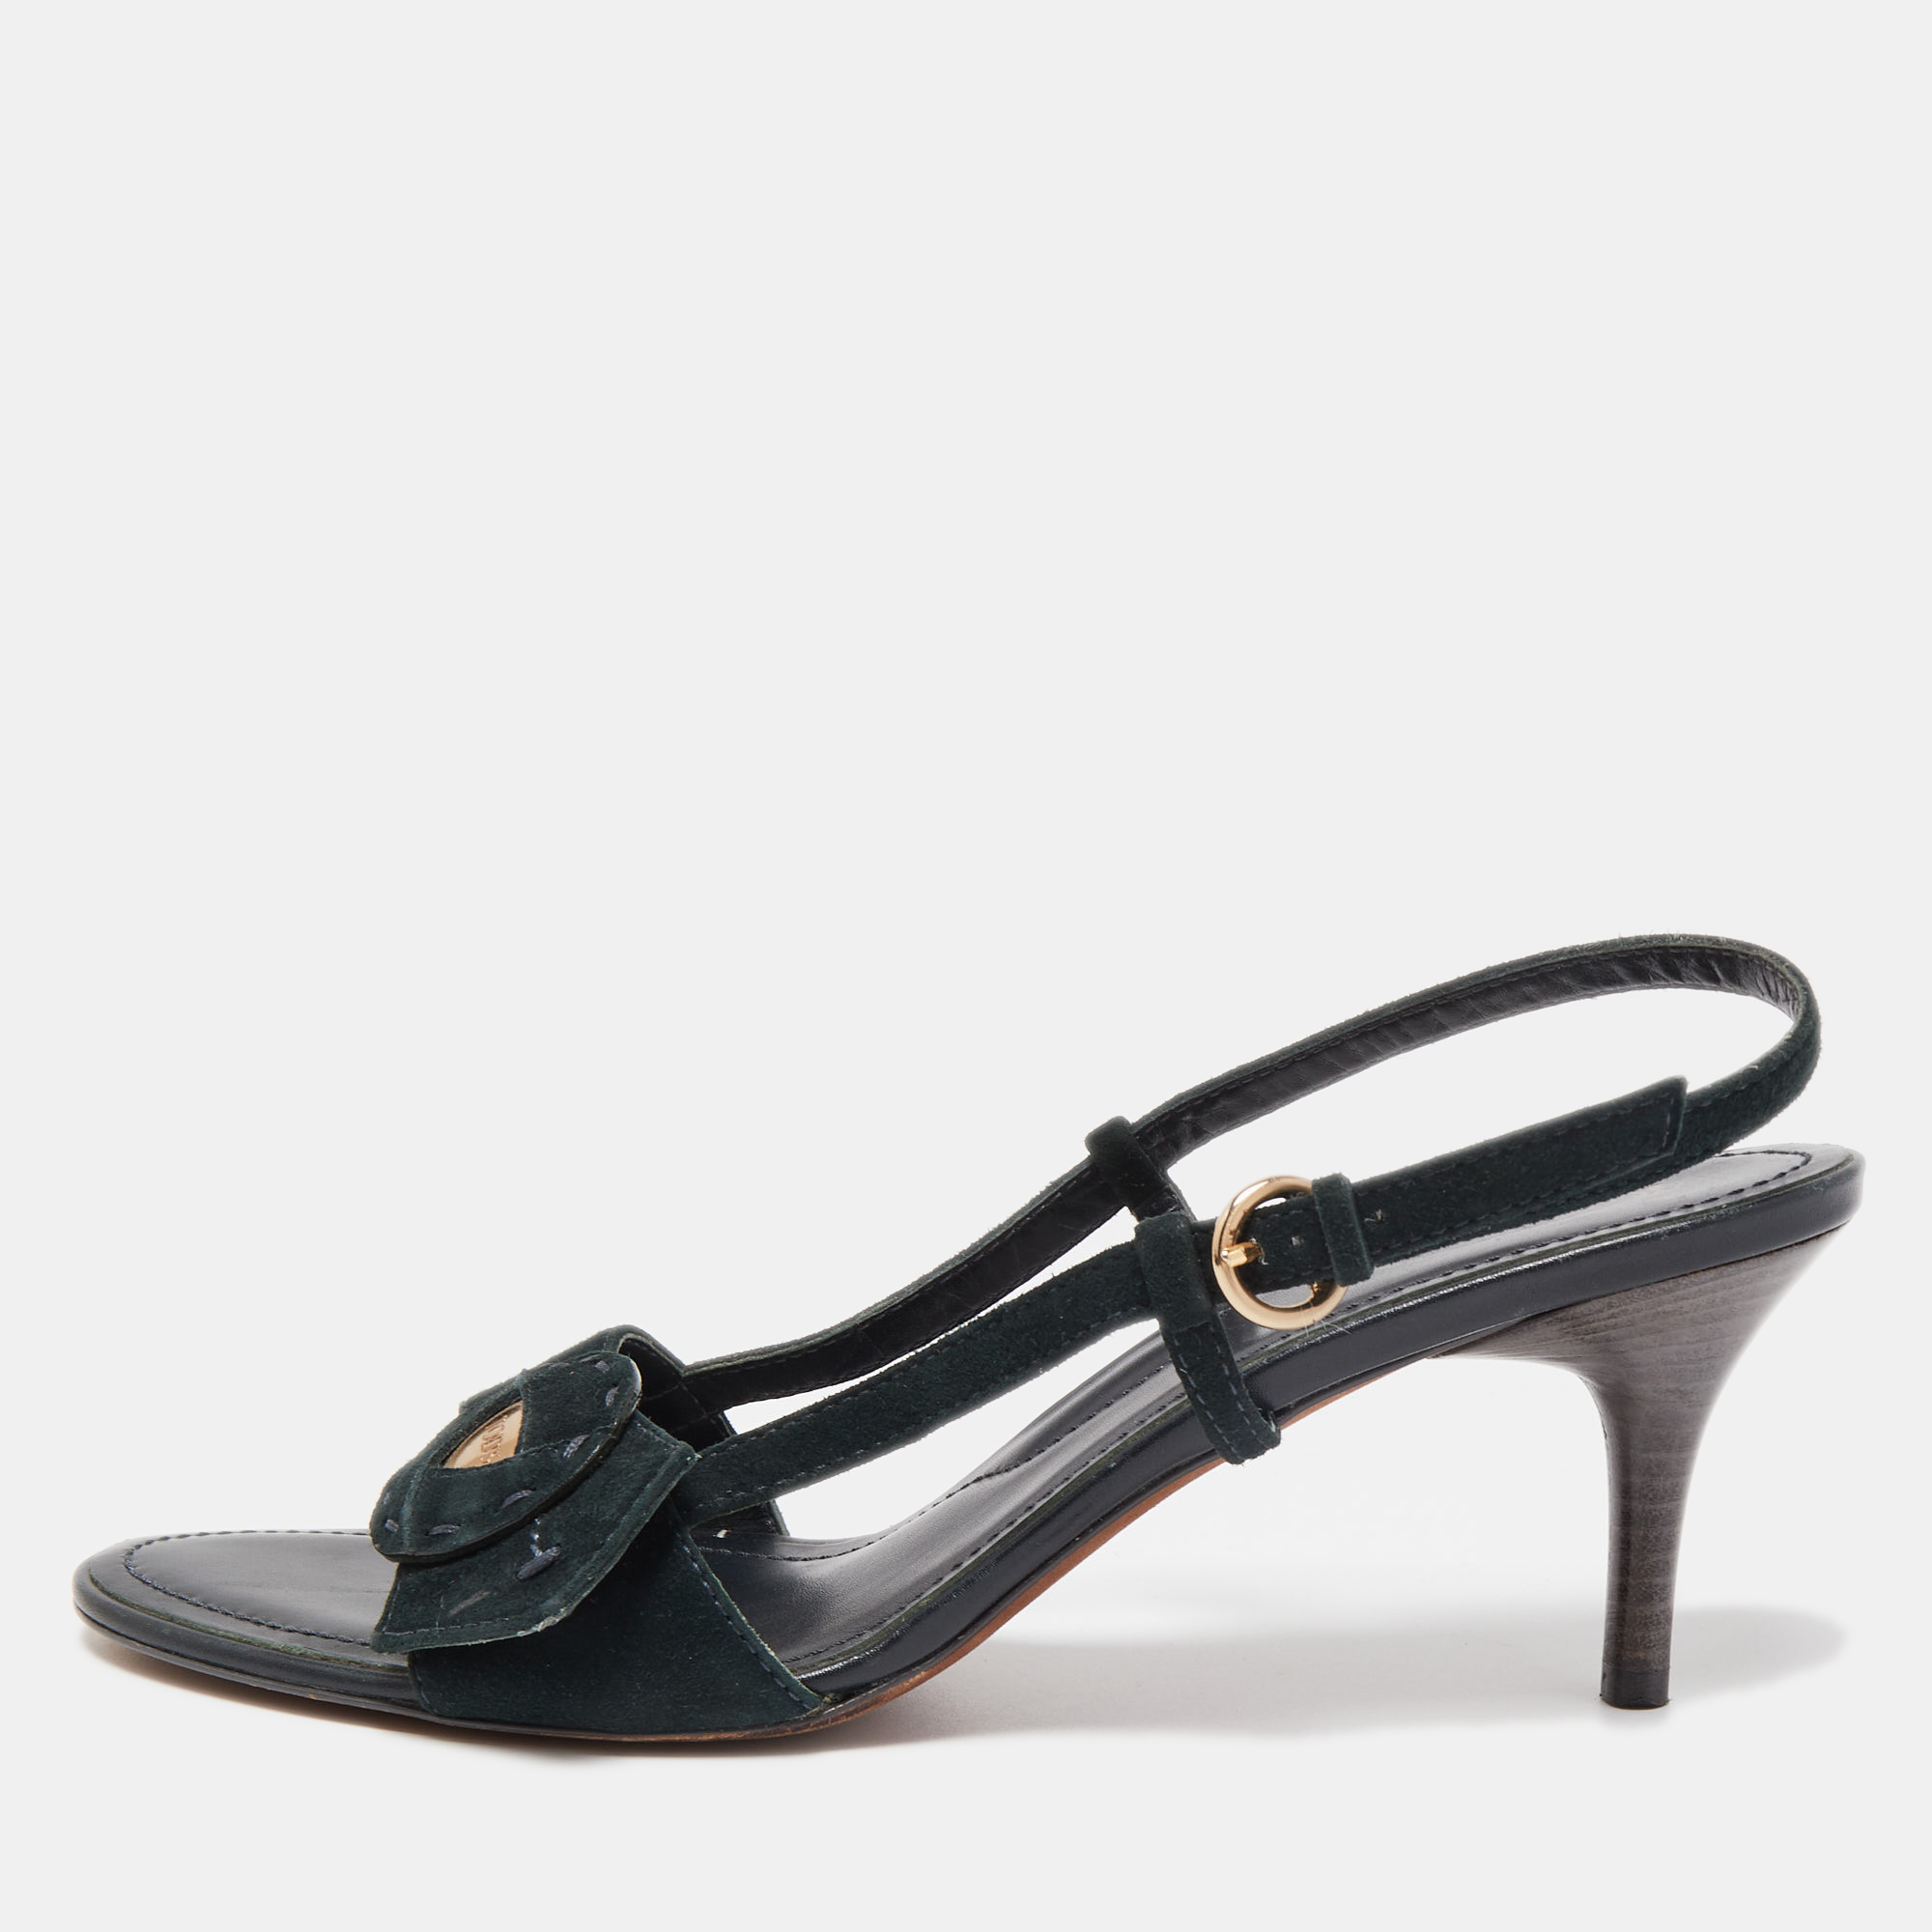 Tod's Black Suede Slingback Sandals Size 40